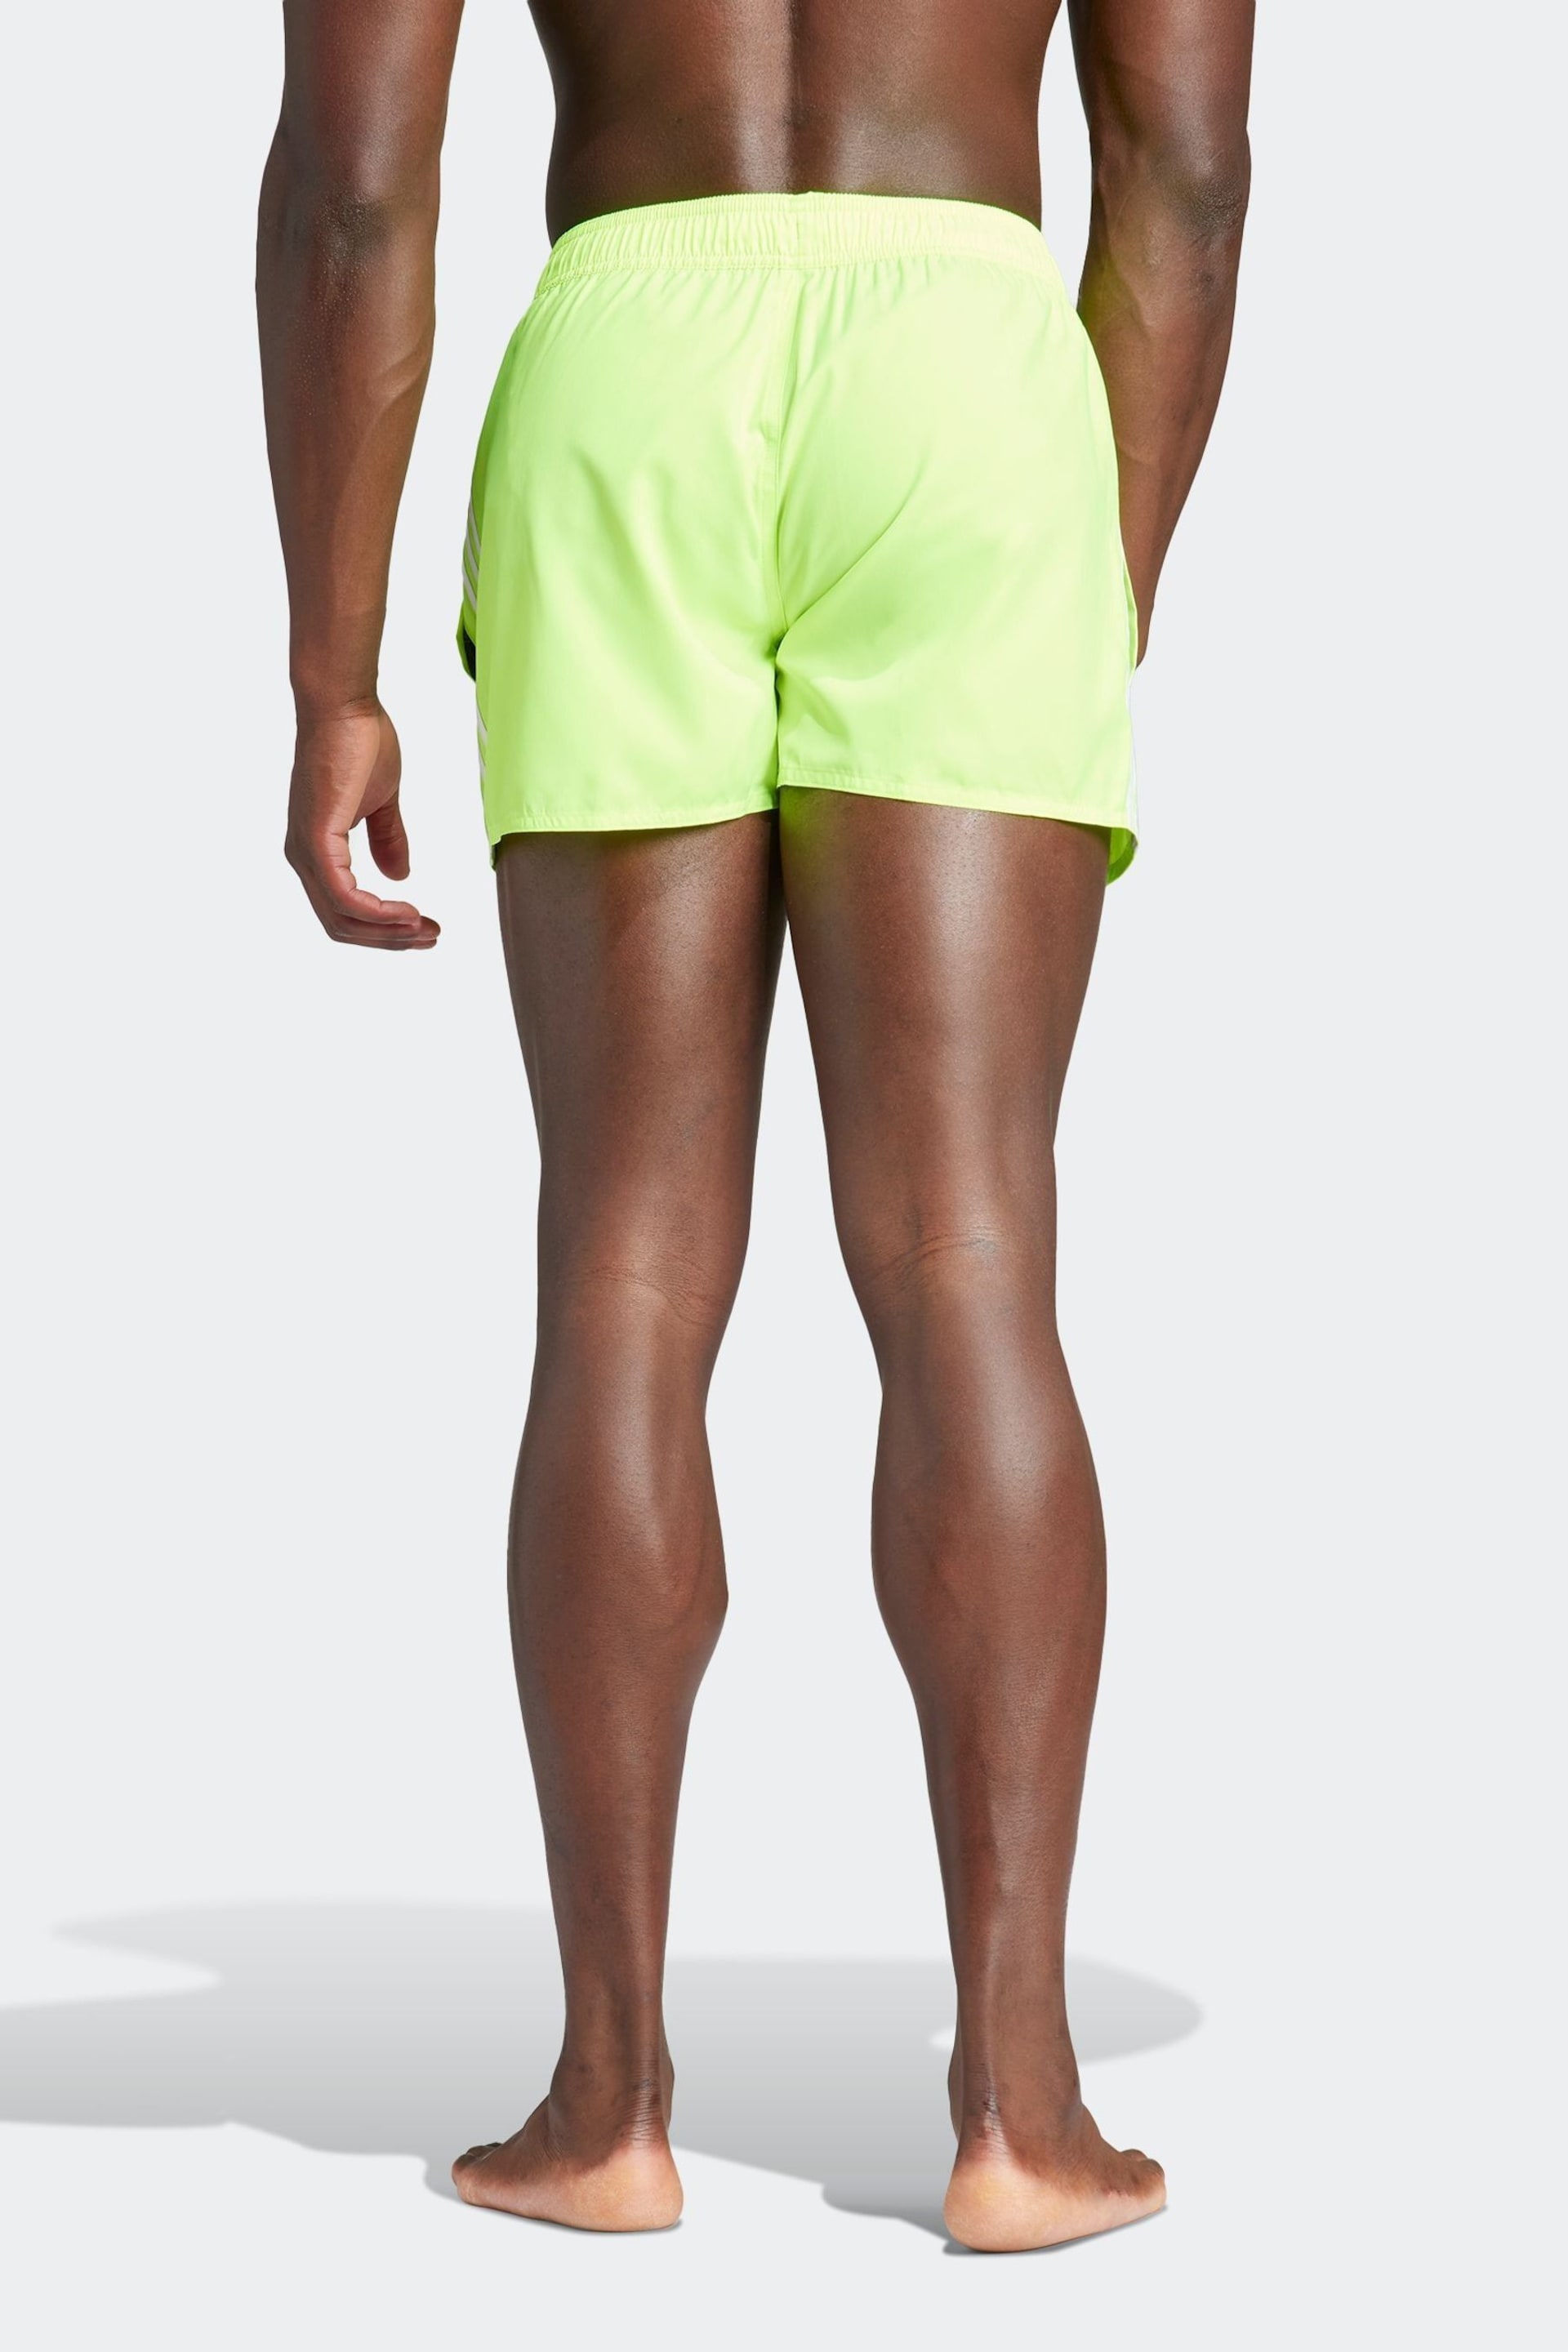 adidas Green 3-Stripes CLX Very Short Length Swim Shorts - Image 2 of 6